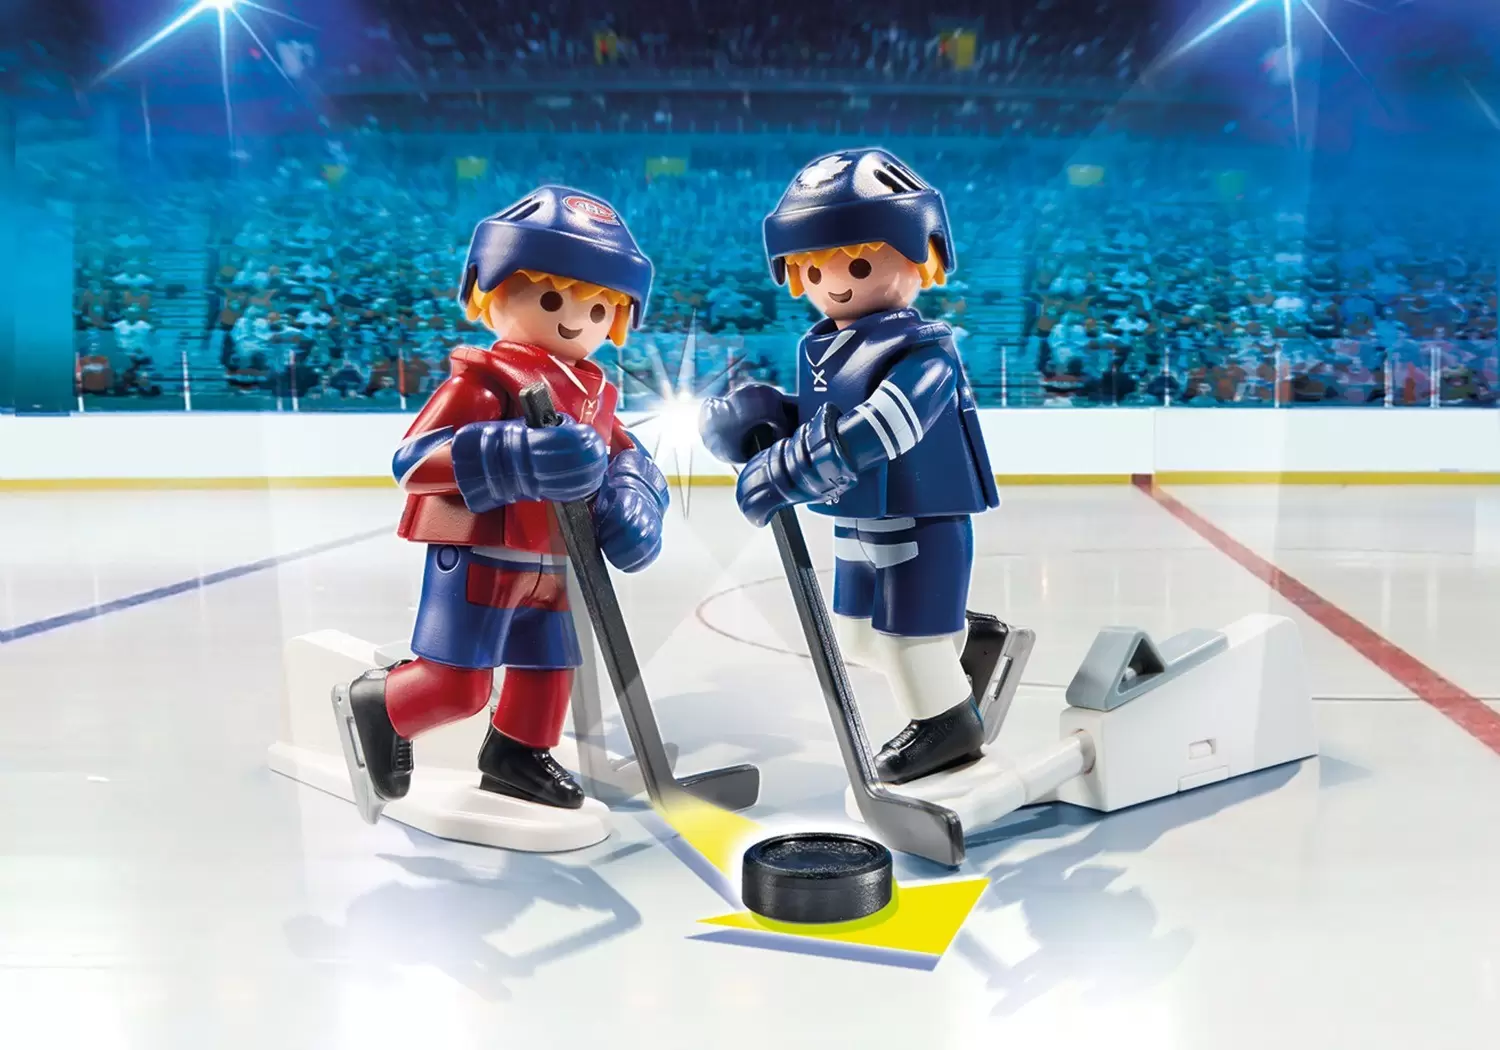 Playmobil Hockey sur Glace - NHL - NHL Montreal Canadiens vs Blister Toronto Maple Leafs